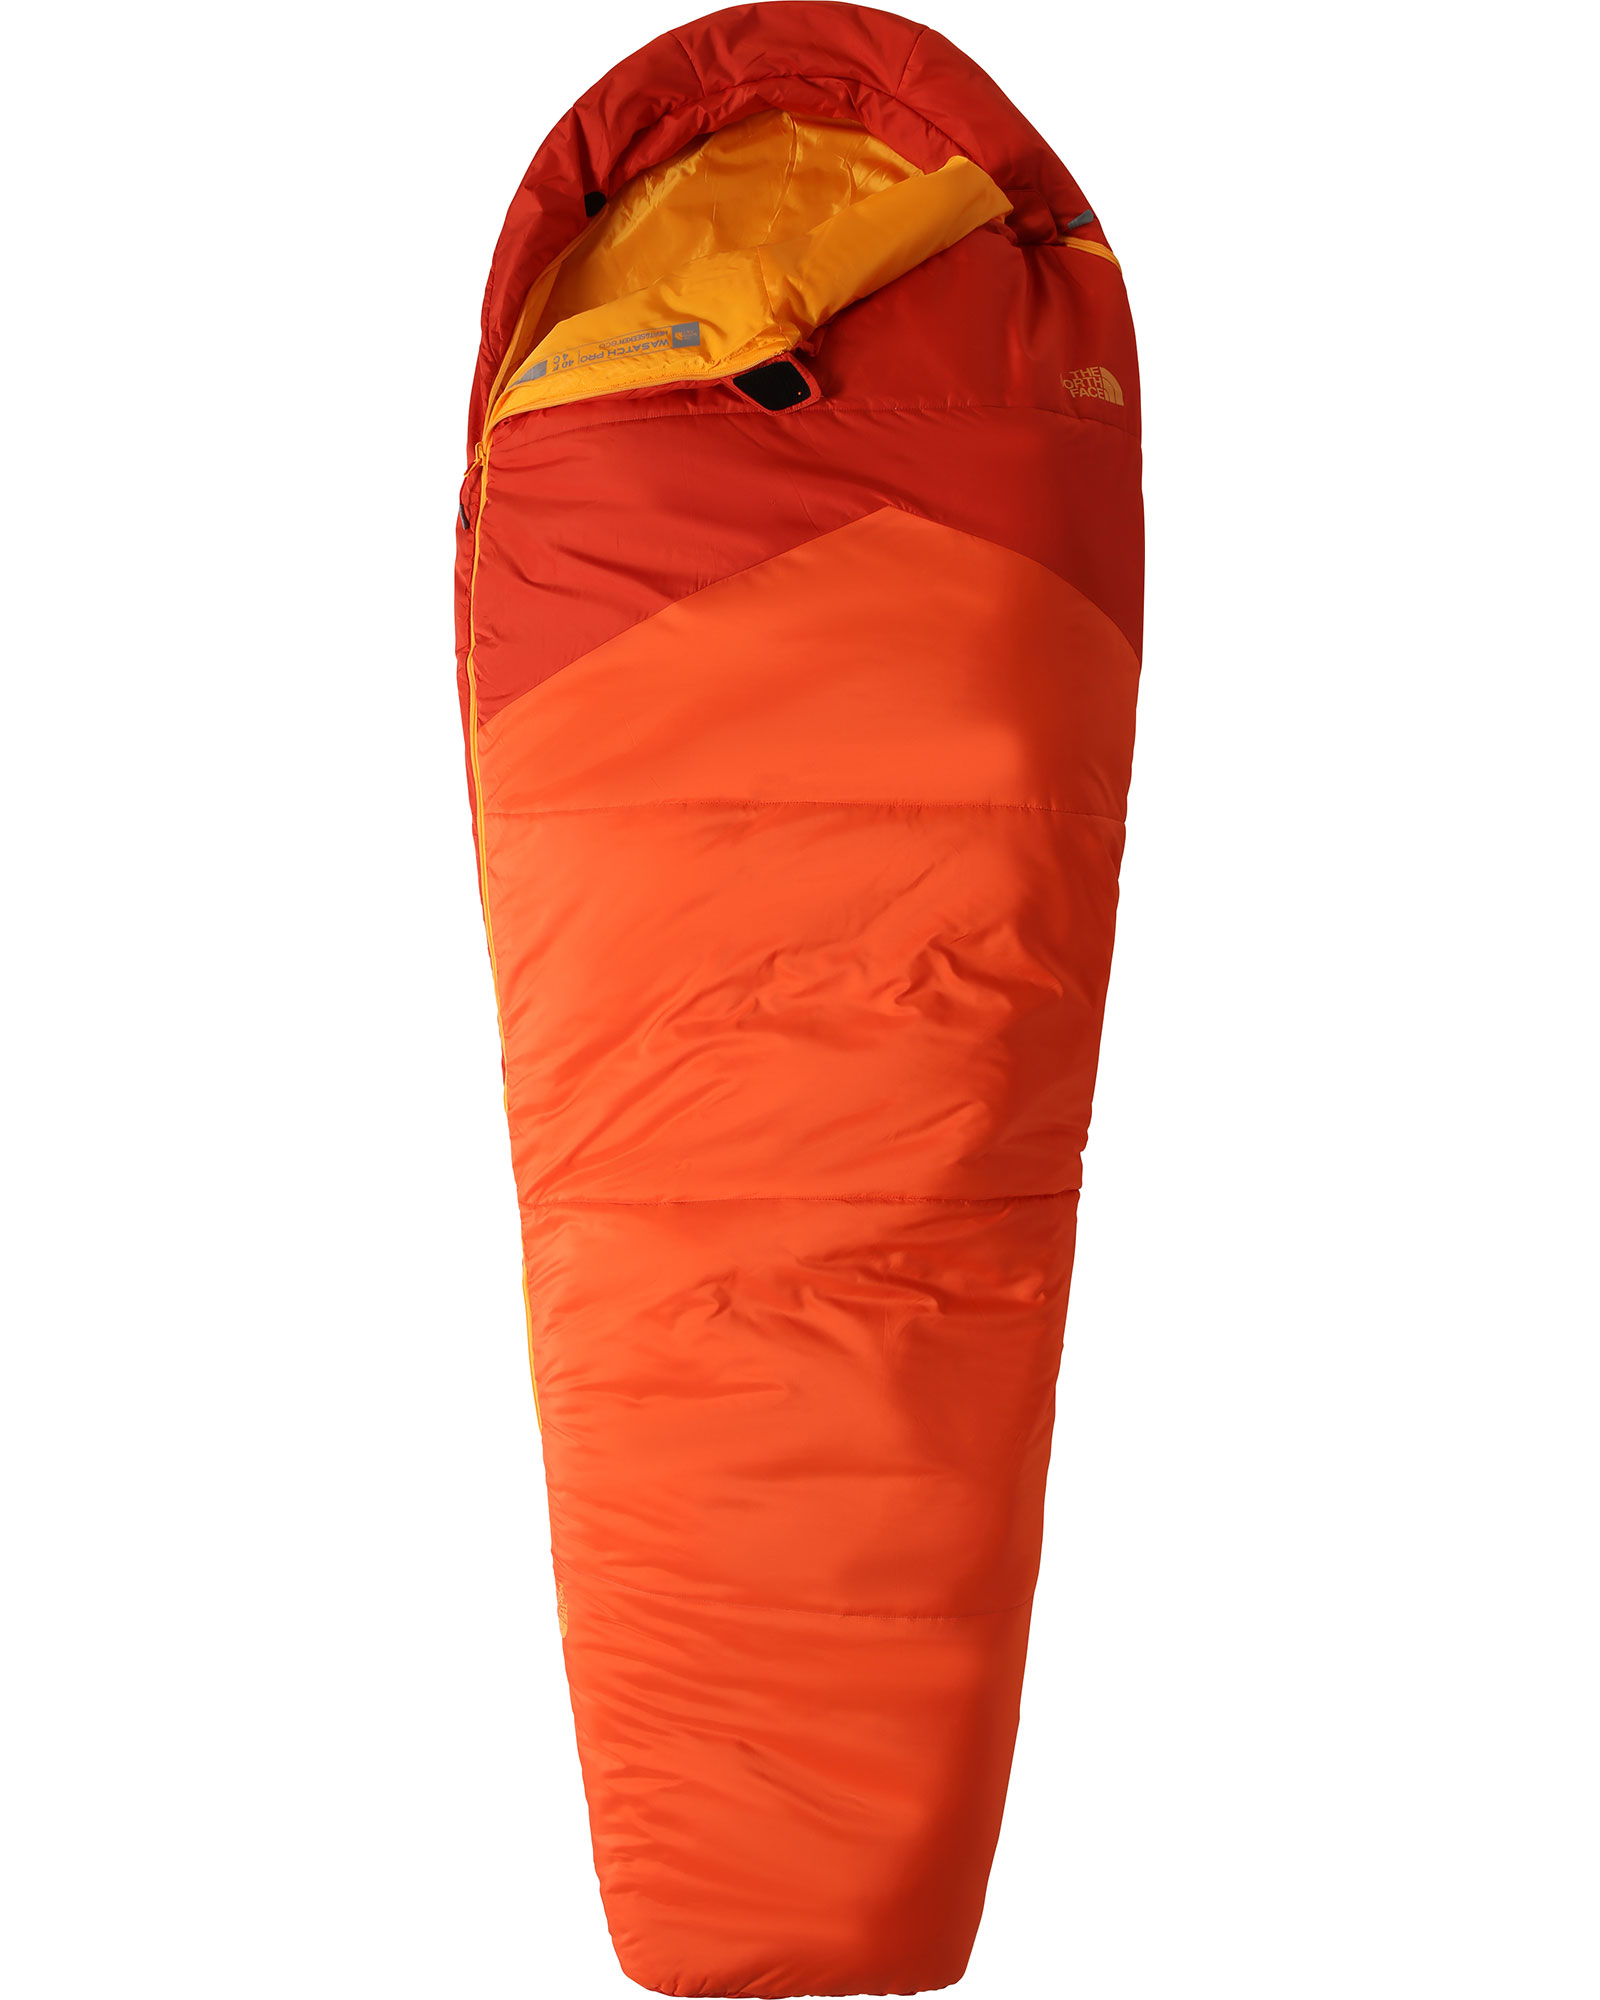 The North Face Wasatch Pro 40 Long - Zion Orange/Persain Orange Right Zip